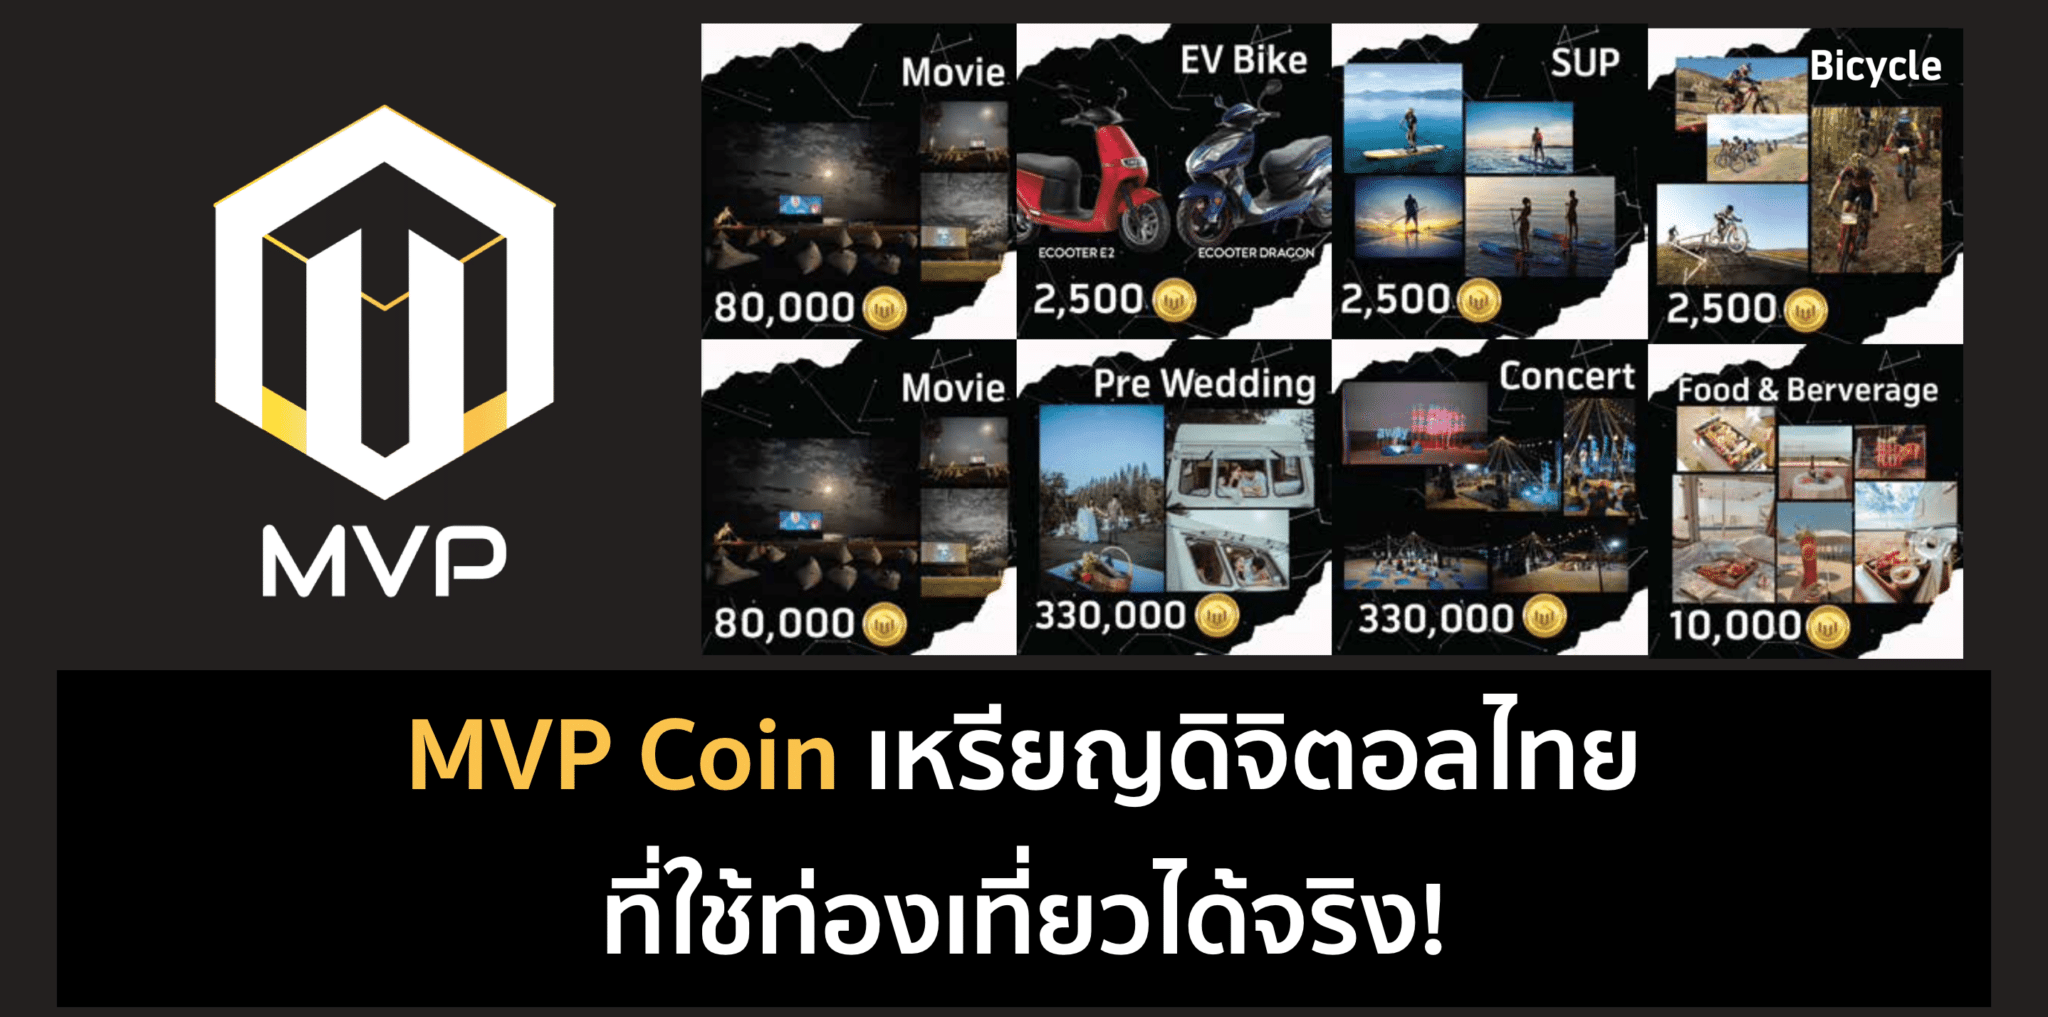 MVP Coin เหรียญดิจิตอลไทยตัวแรก ที่ใช้จ่ายท่องเที่ยวได้จริง!